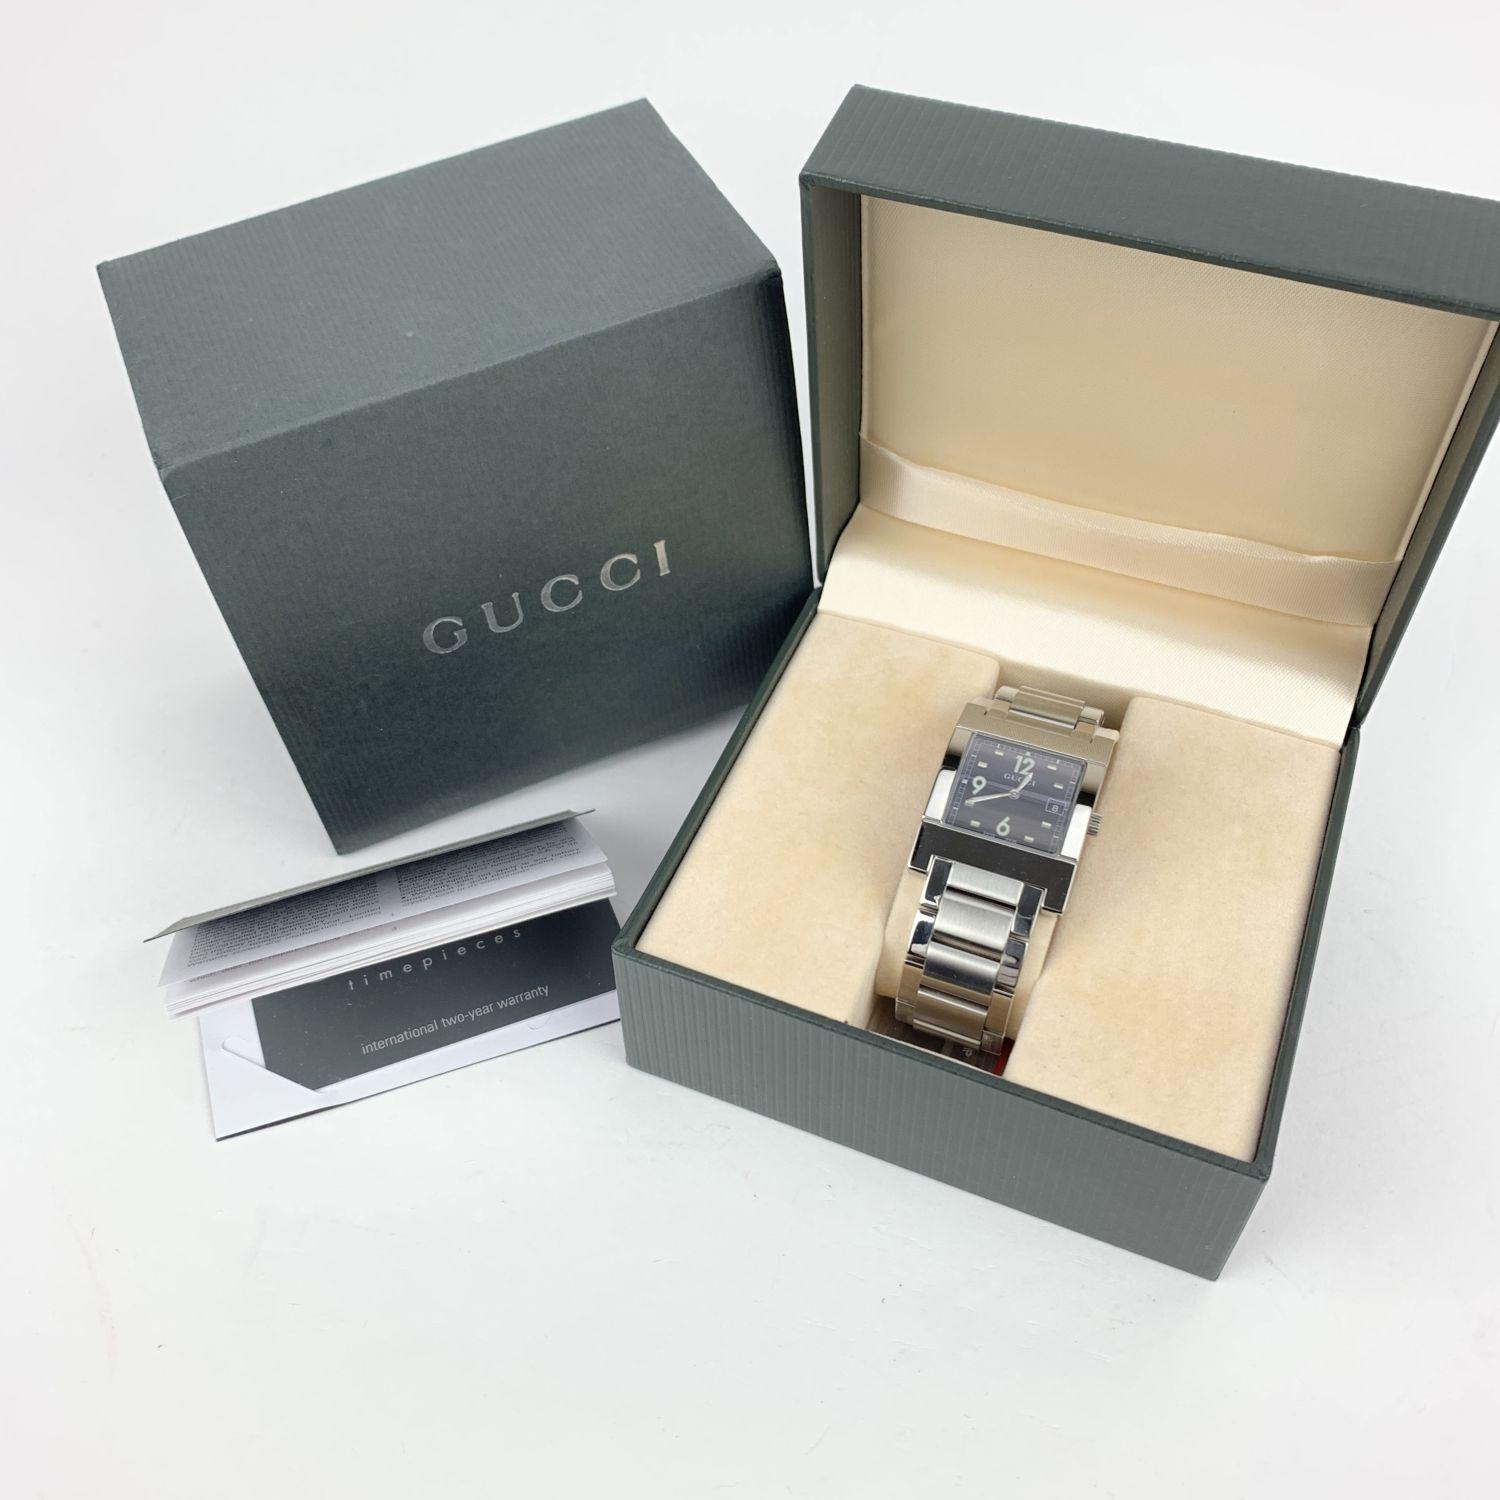 gucci 7700 chrono watch price